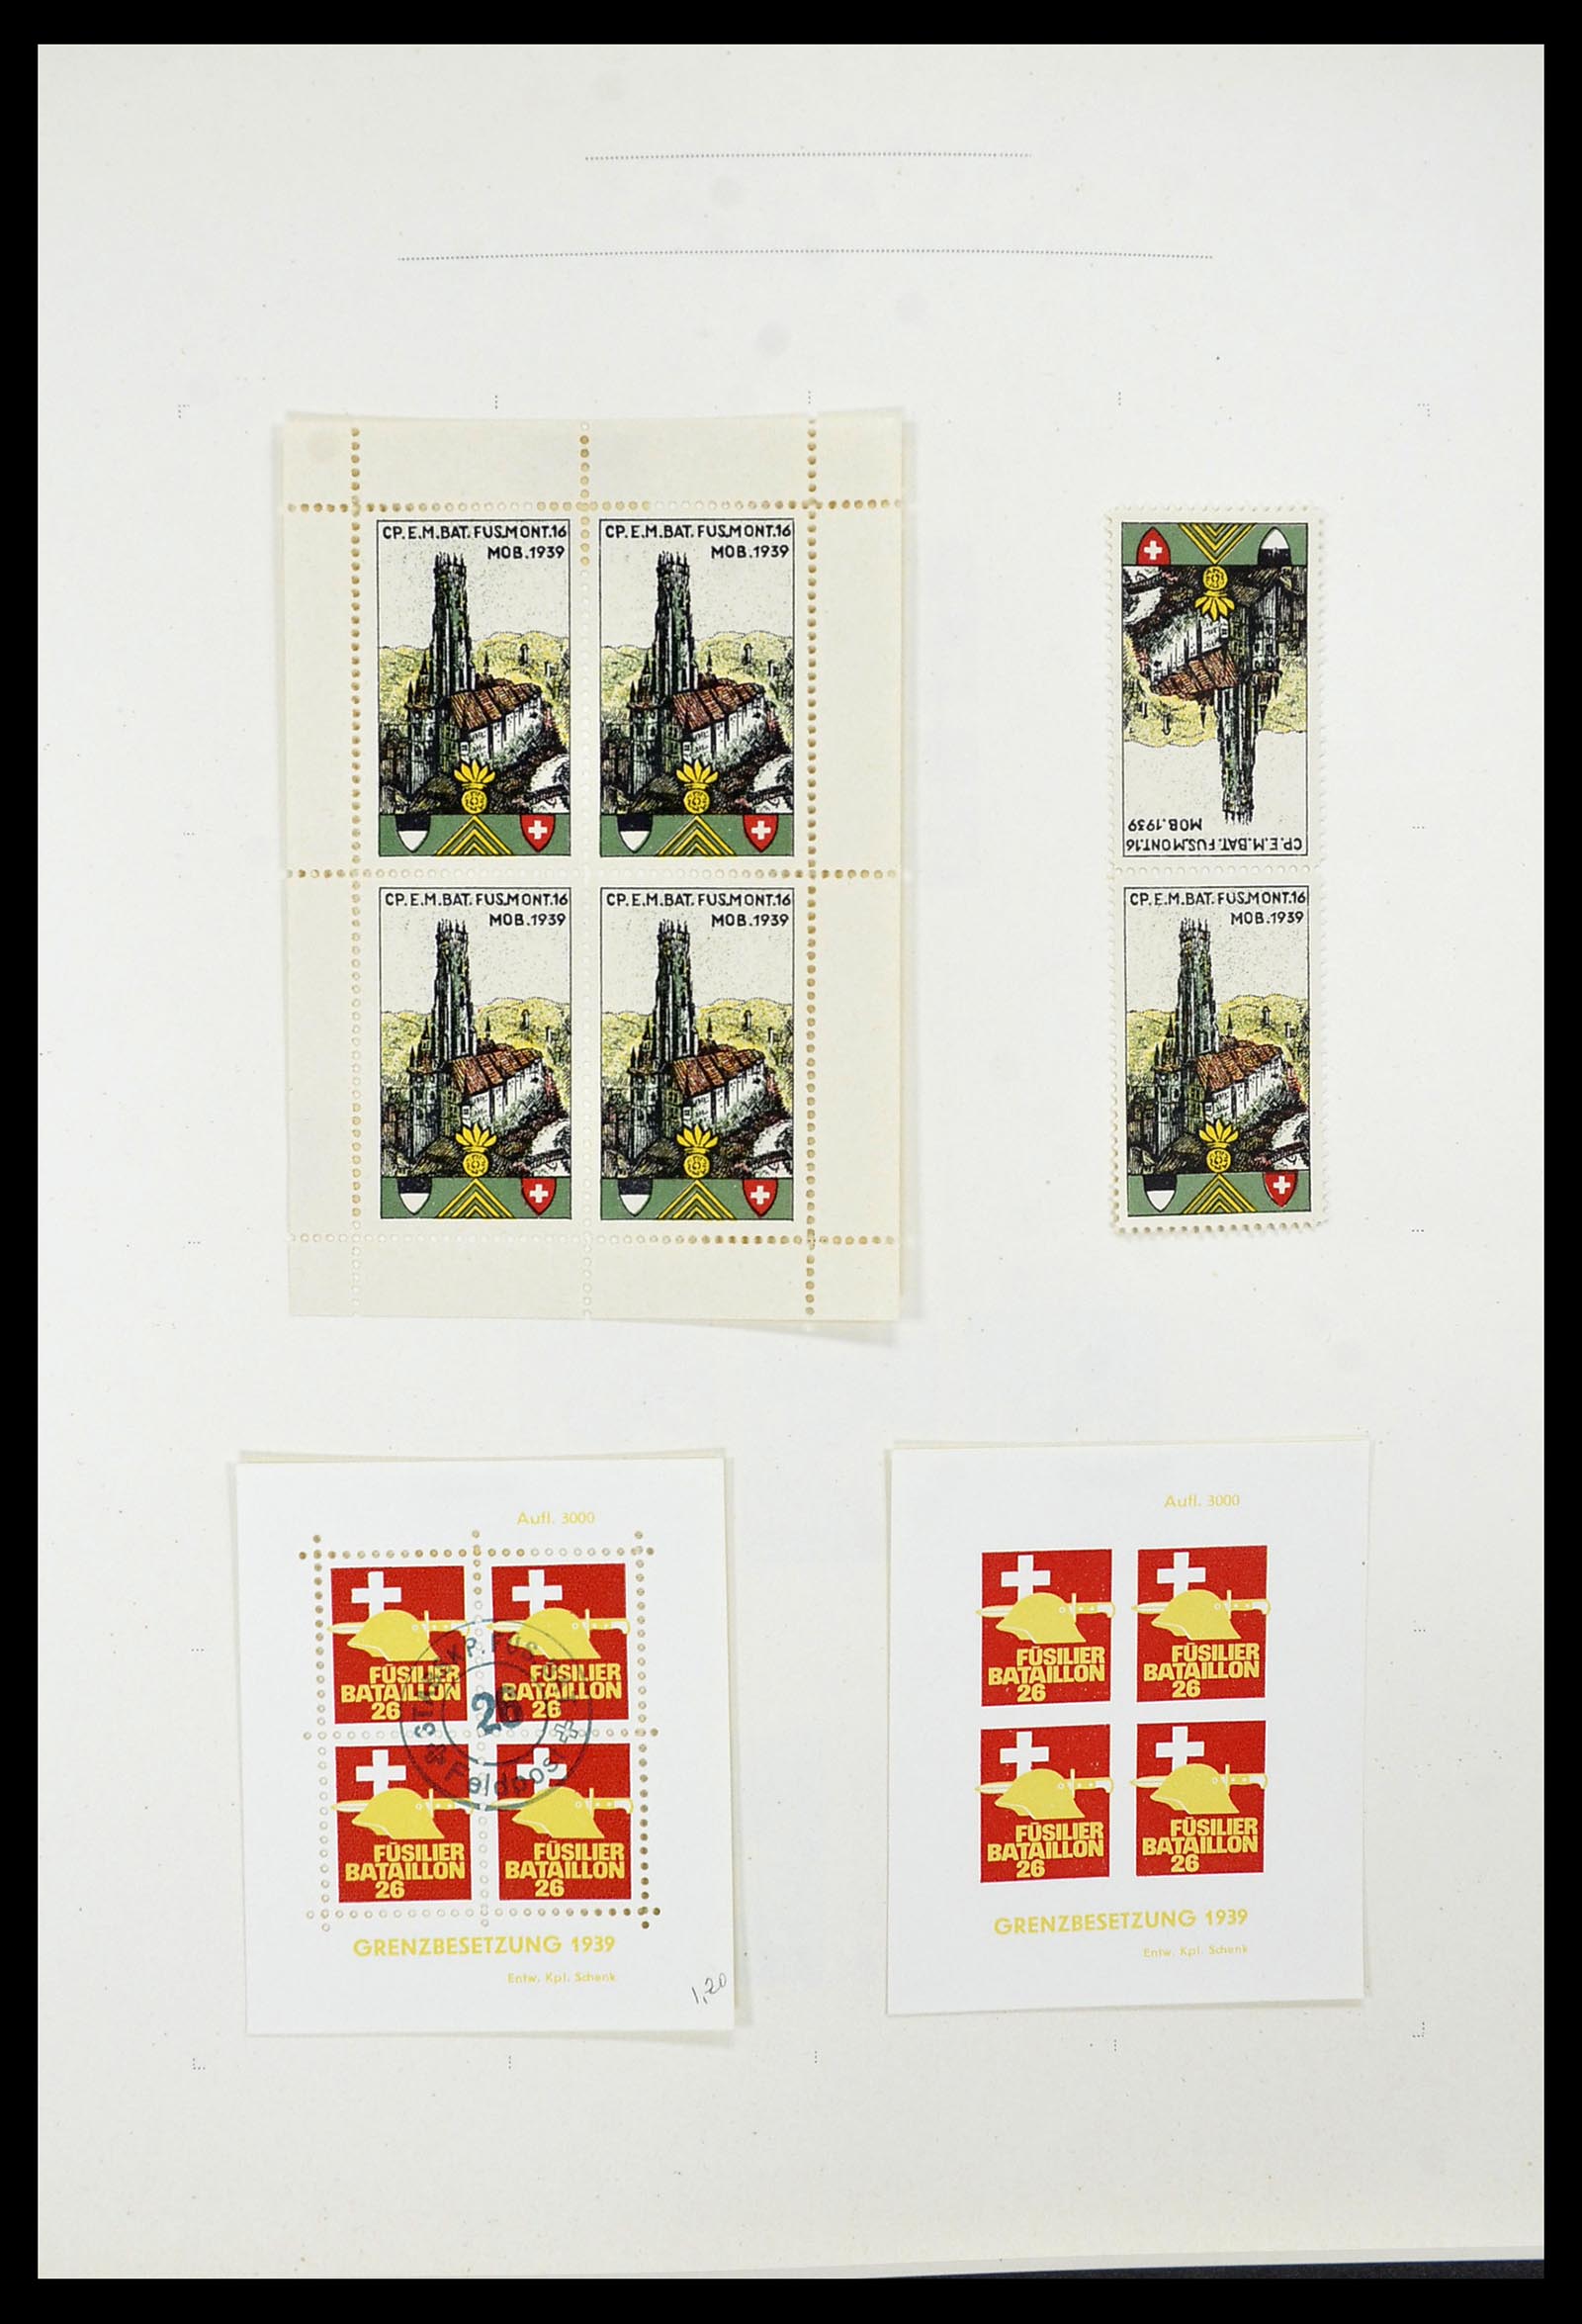 34234 040 - Stamp collection 34234 Switzerland soldier stamps 1939-1945.